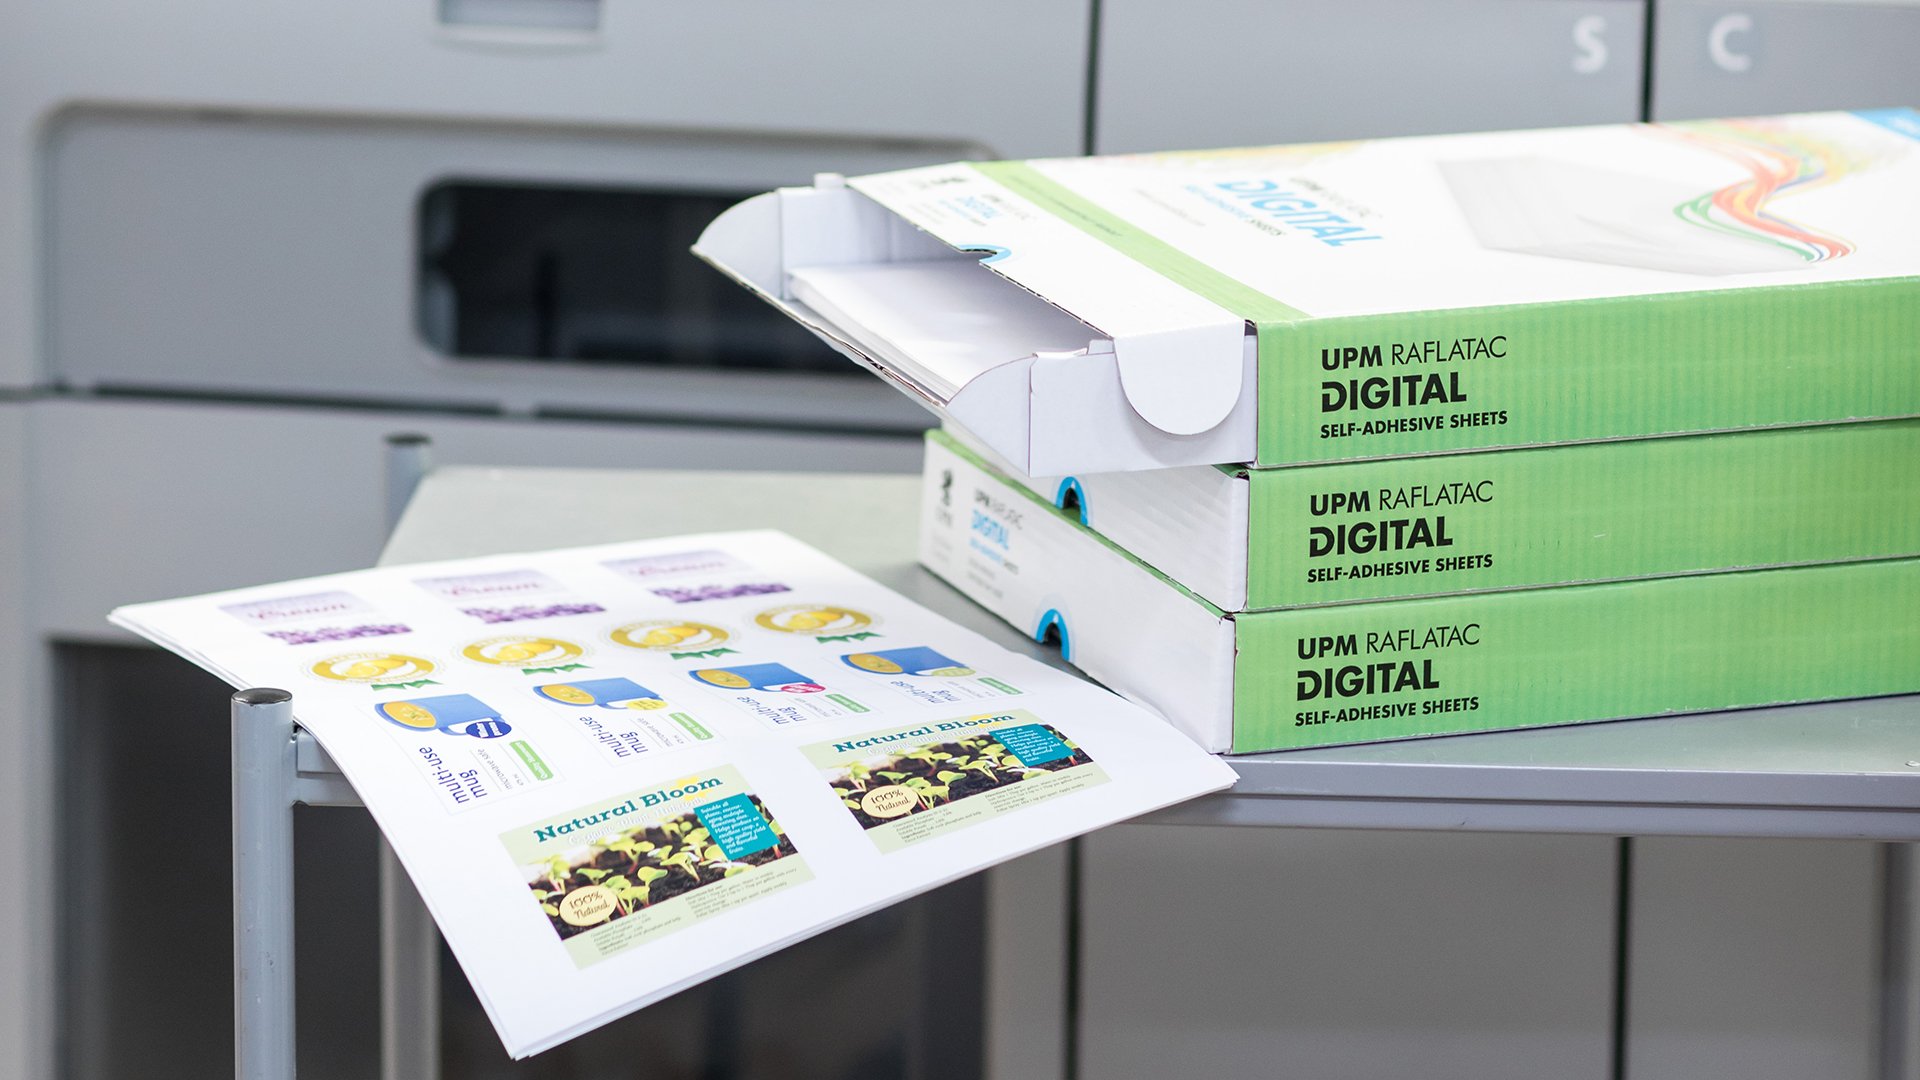 UPM Raflatac self-adhesive sheets digital package boxes